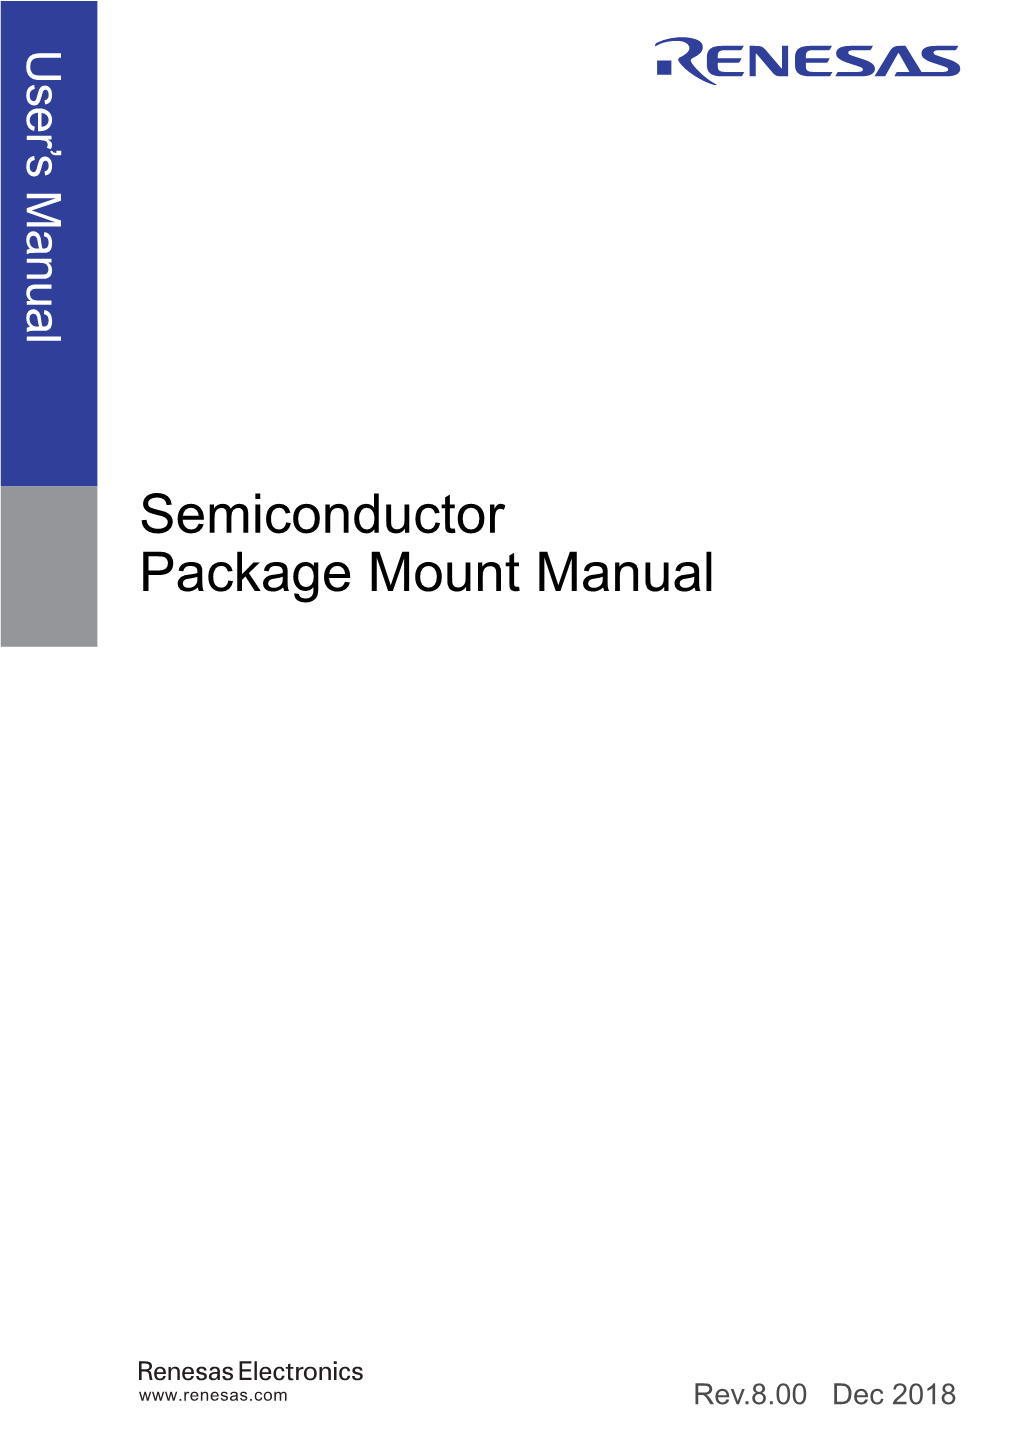 Semiconductor Package Mount Manual R50ZZ0003EJ0800 Rev